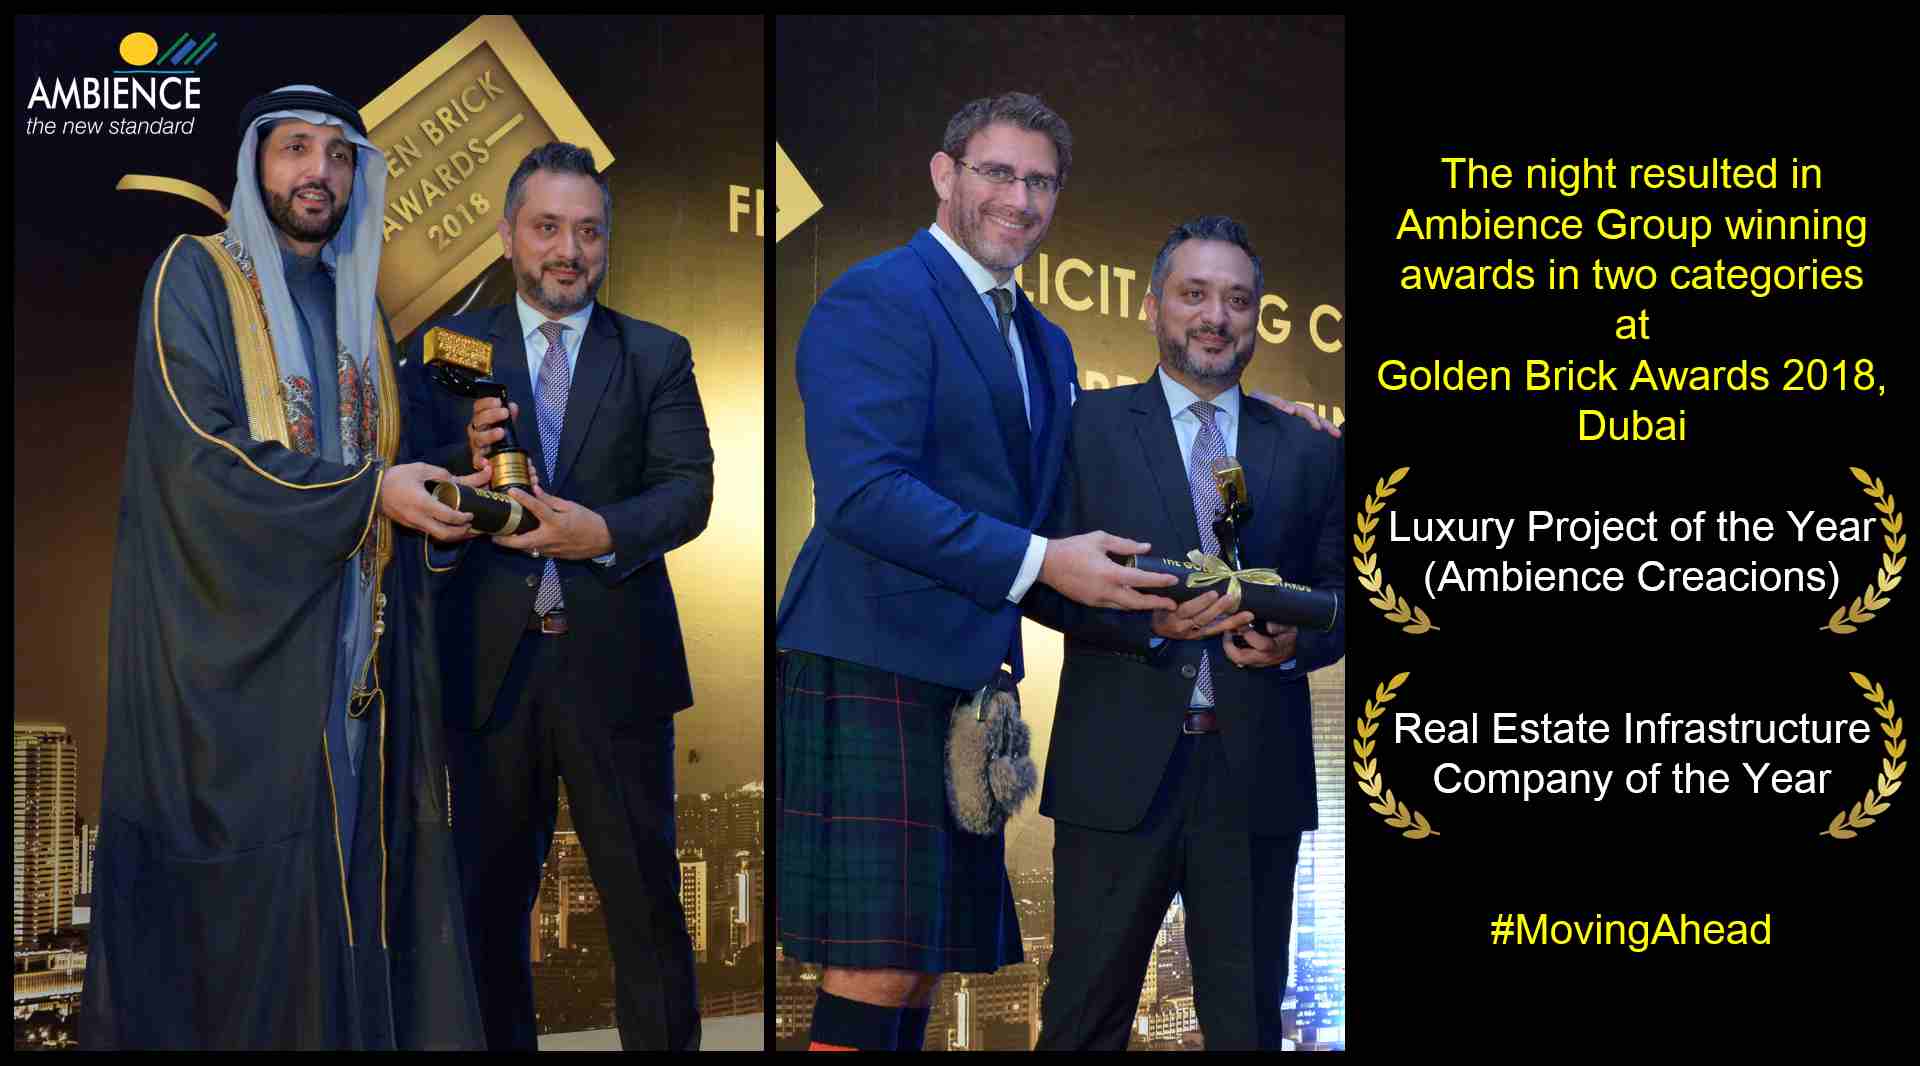 Ambience Group won 2 awards at Golden Brick Awards 2018, Dubai